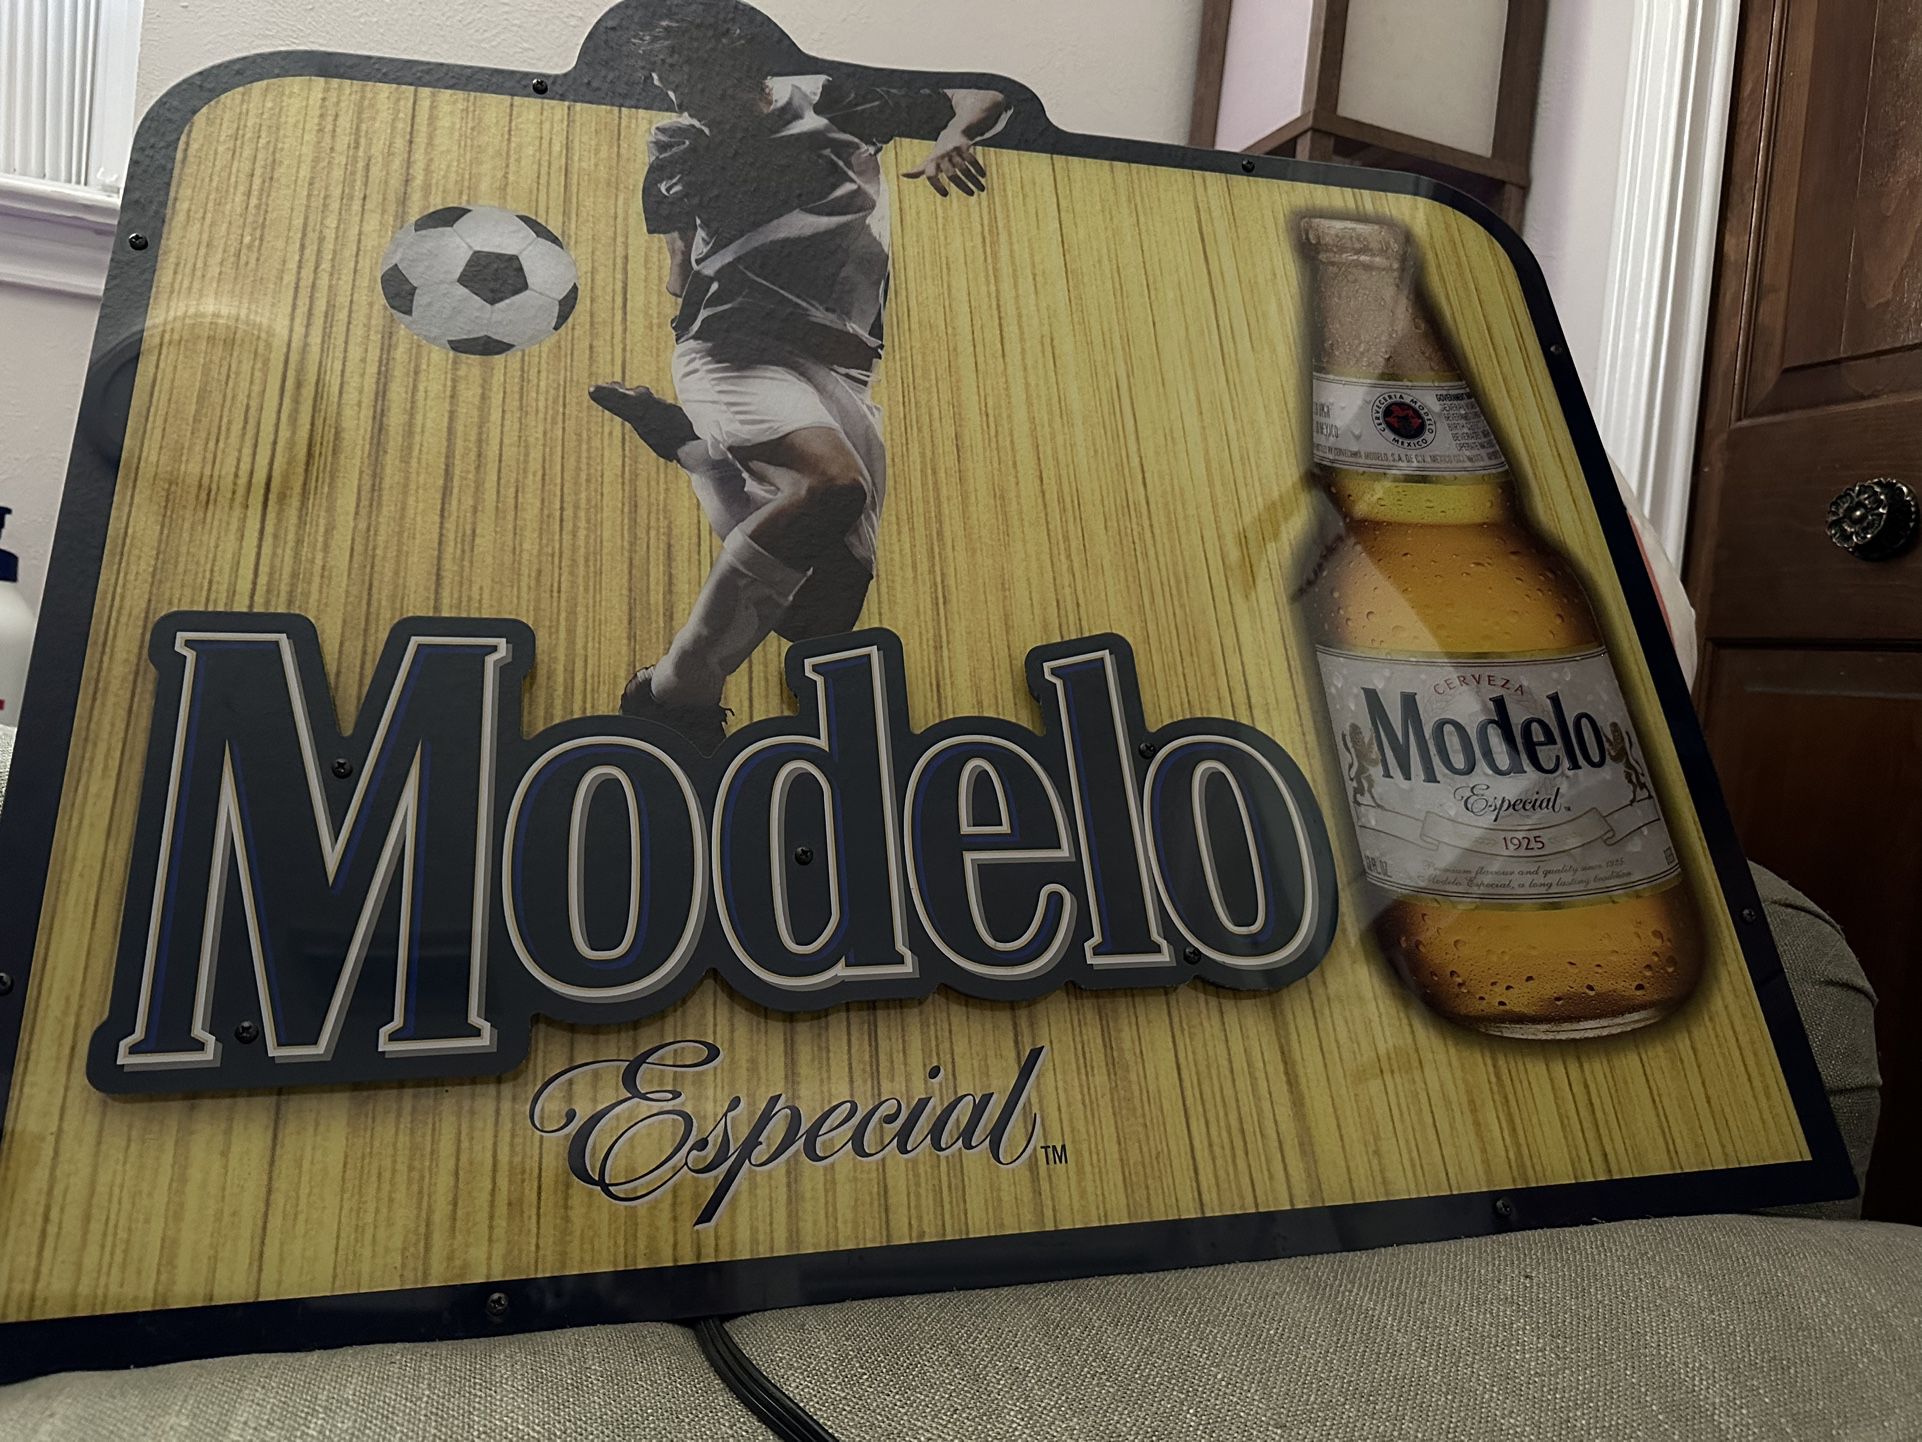 Modelo Beer Sign